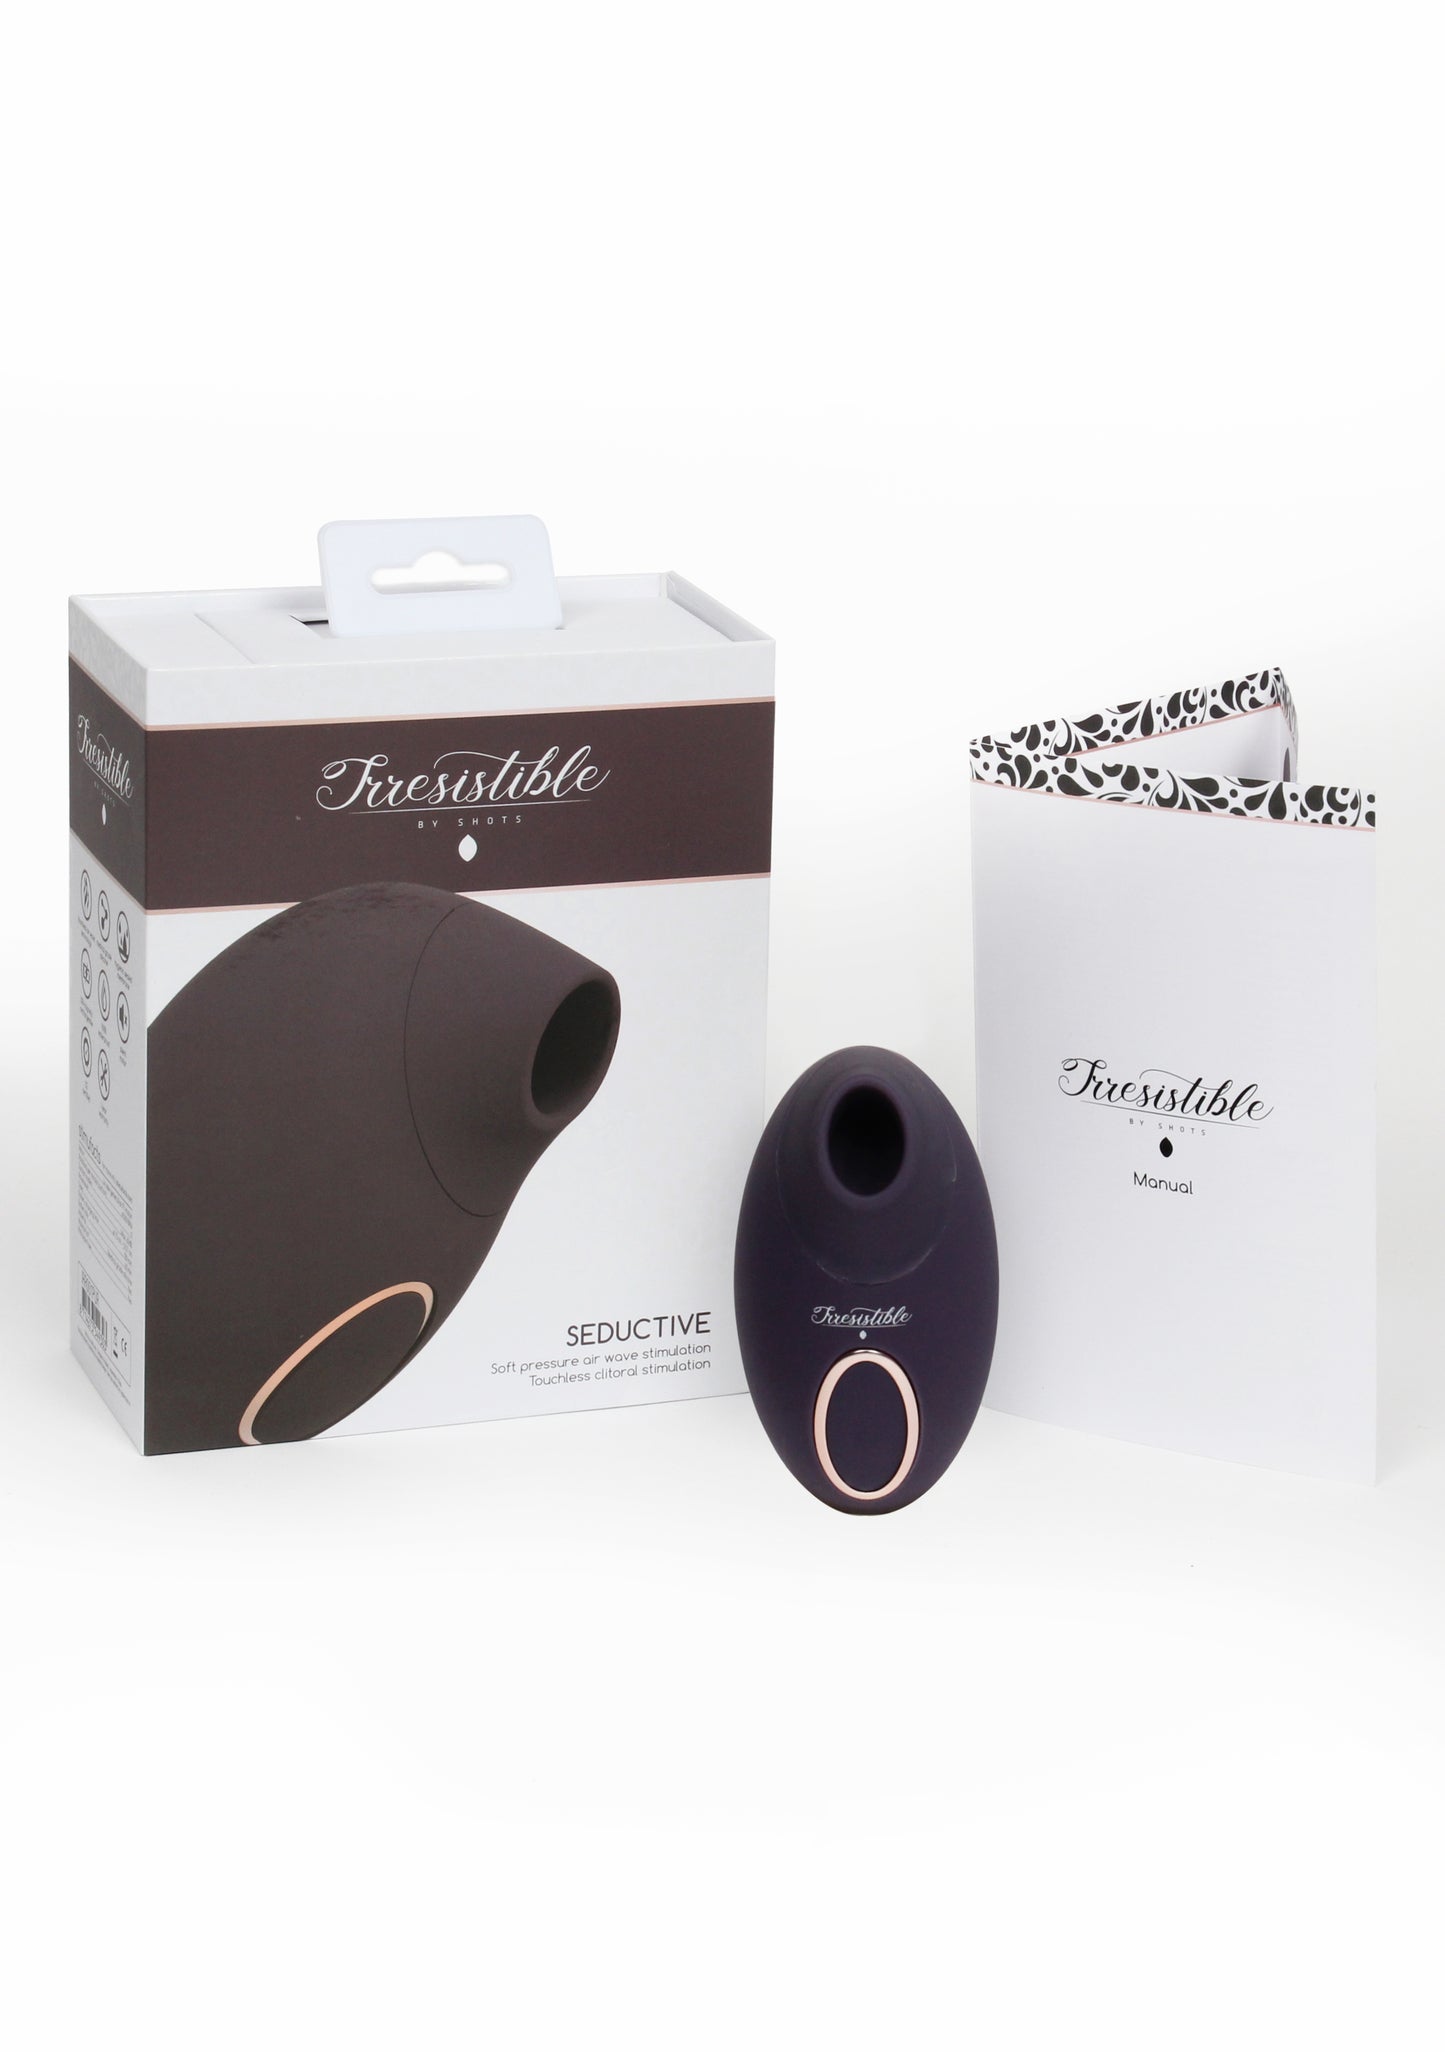 The Irresistible Collection Seductive Air Pulse Vibrator